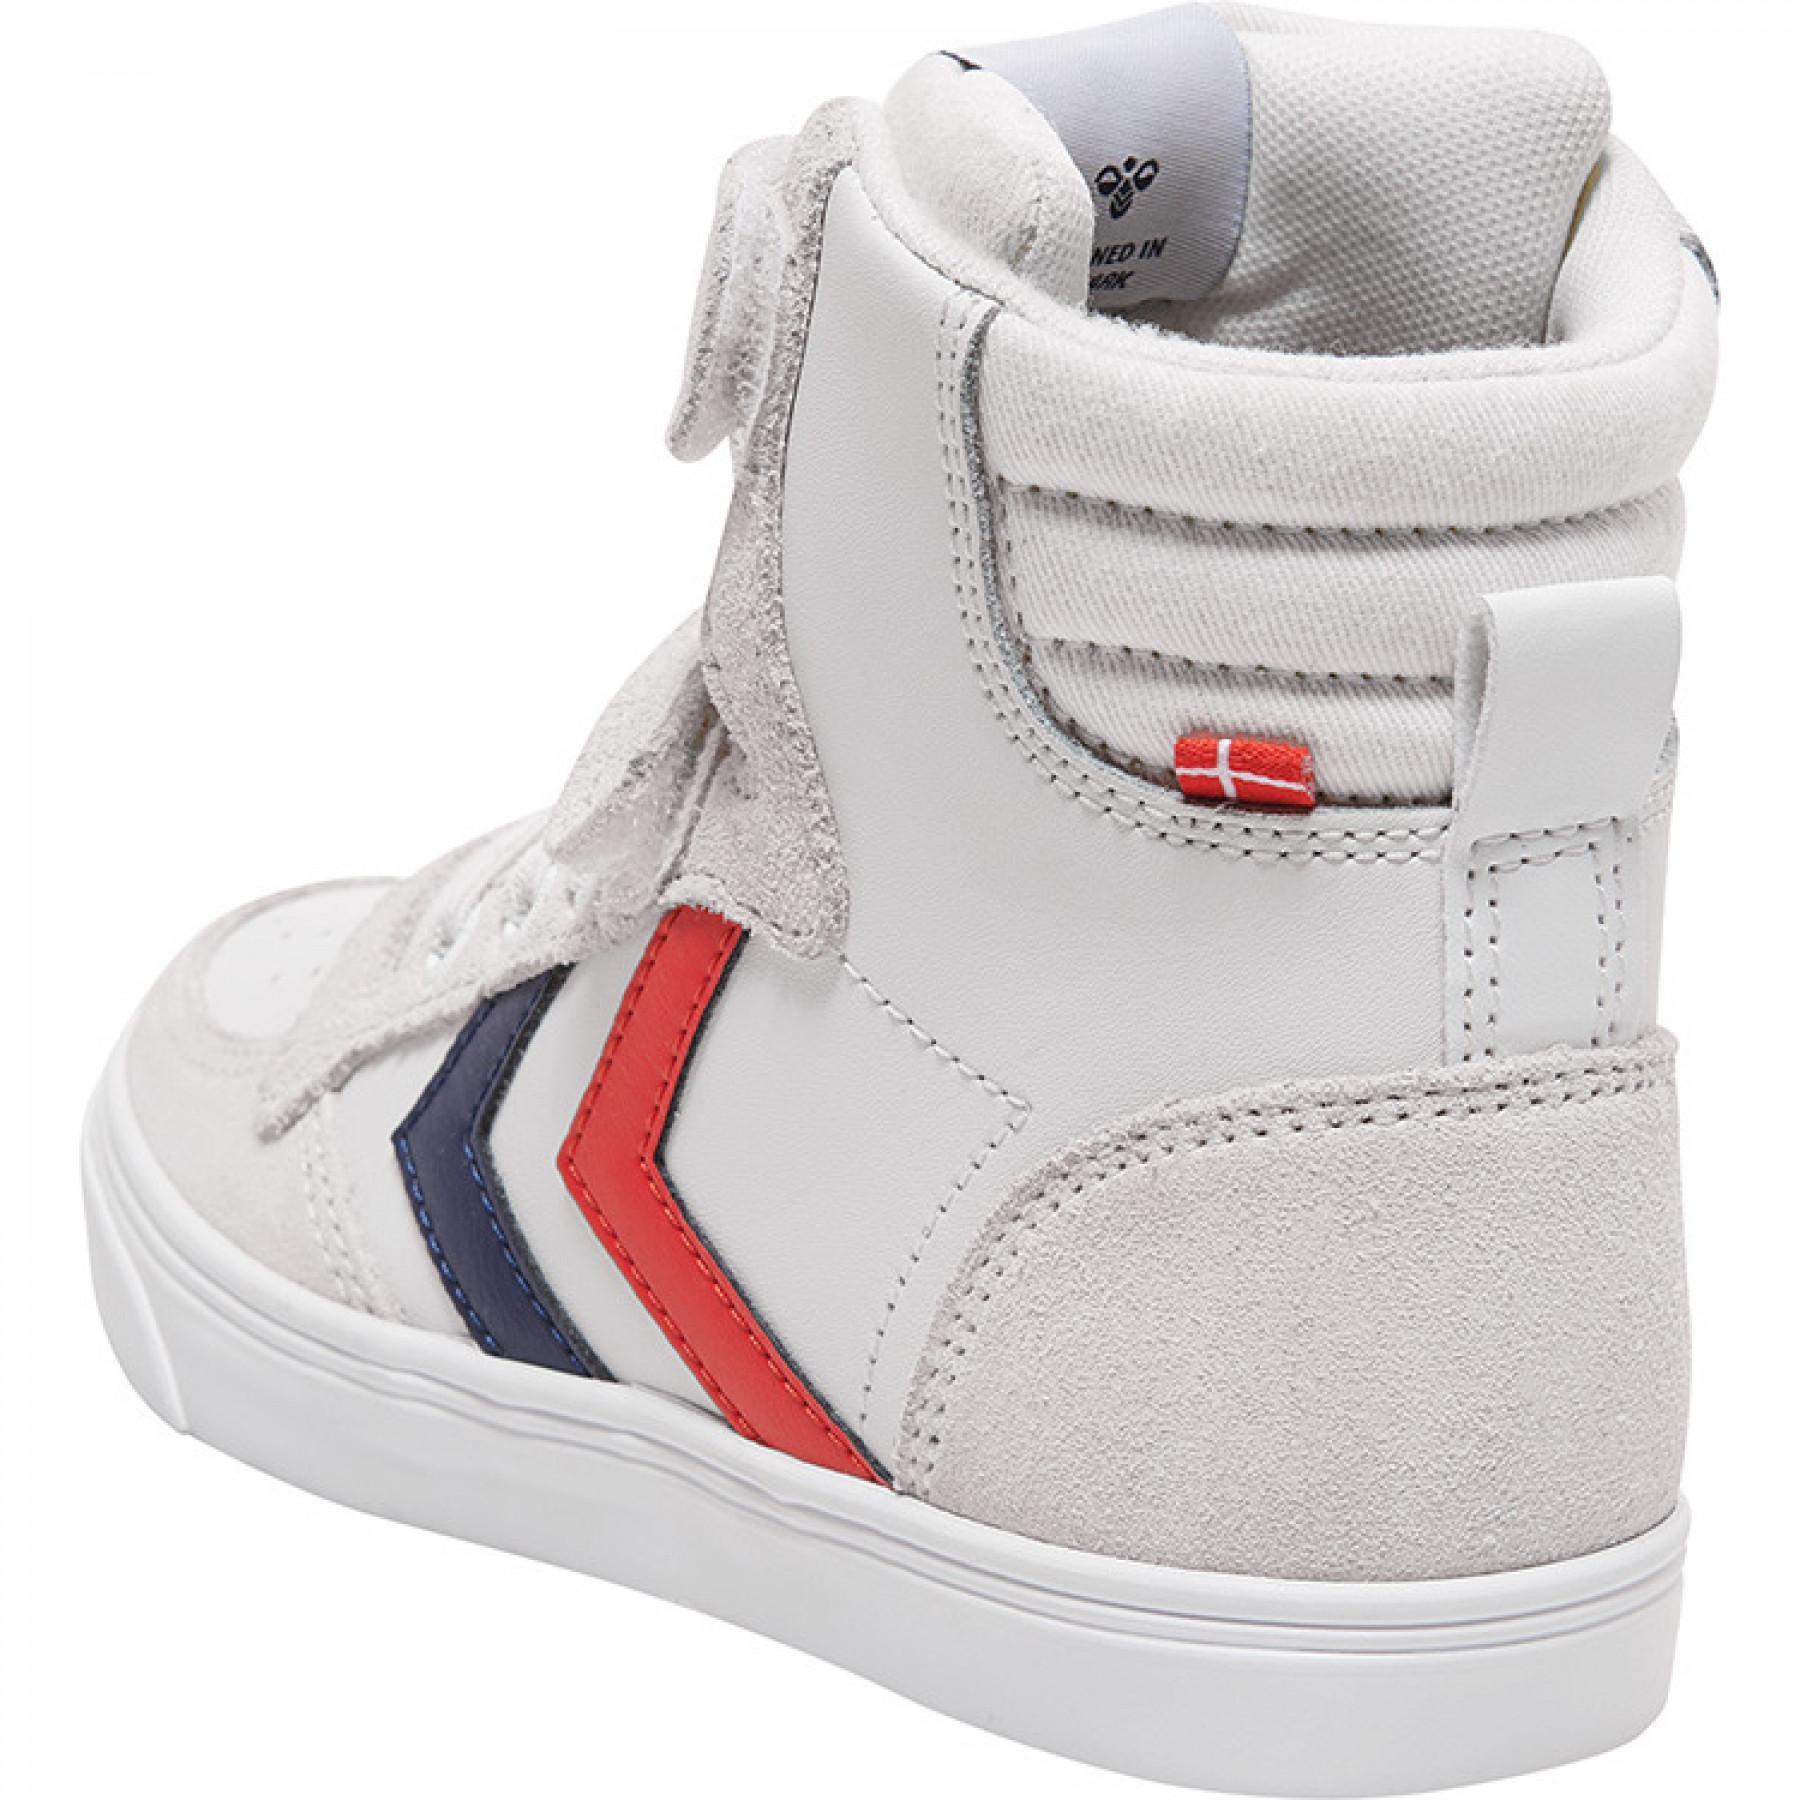 Children's sneakers Hummel slimmer stadil leather - Hummel - Junior Sneakers - Lifestyle